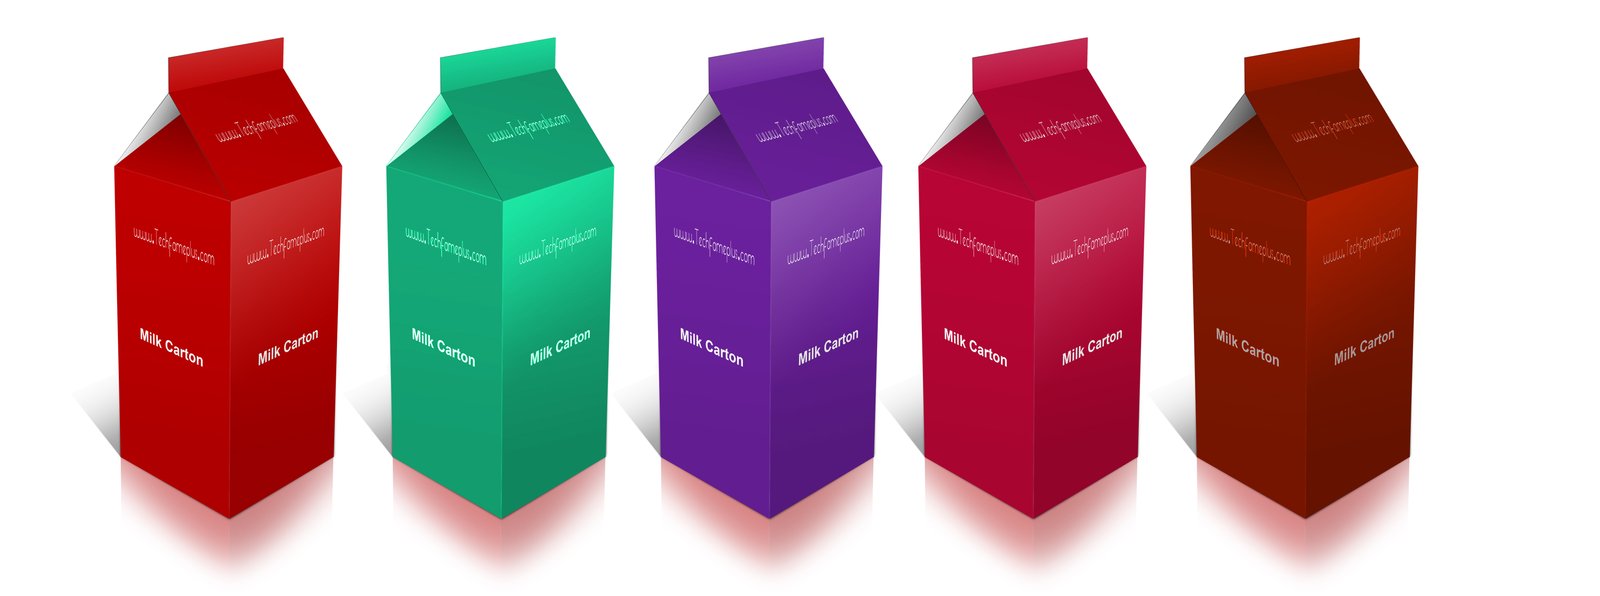 Awesome Milk Carton Mockup Design